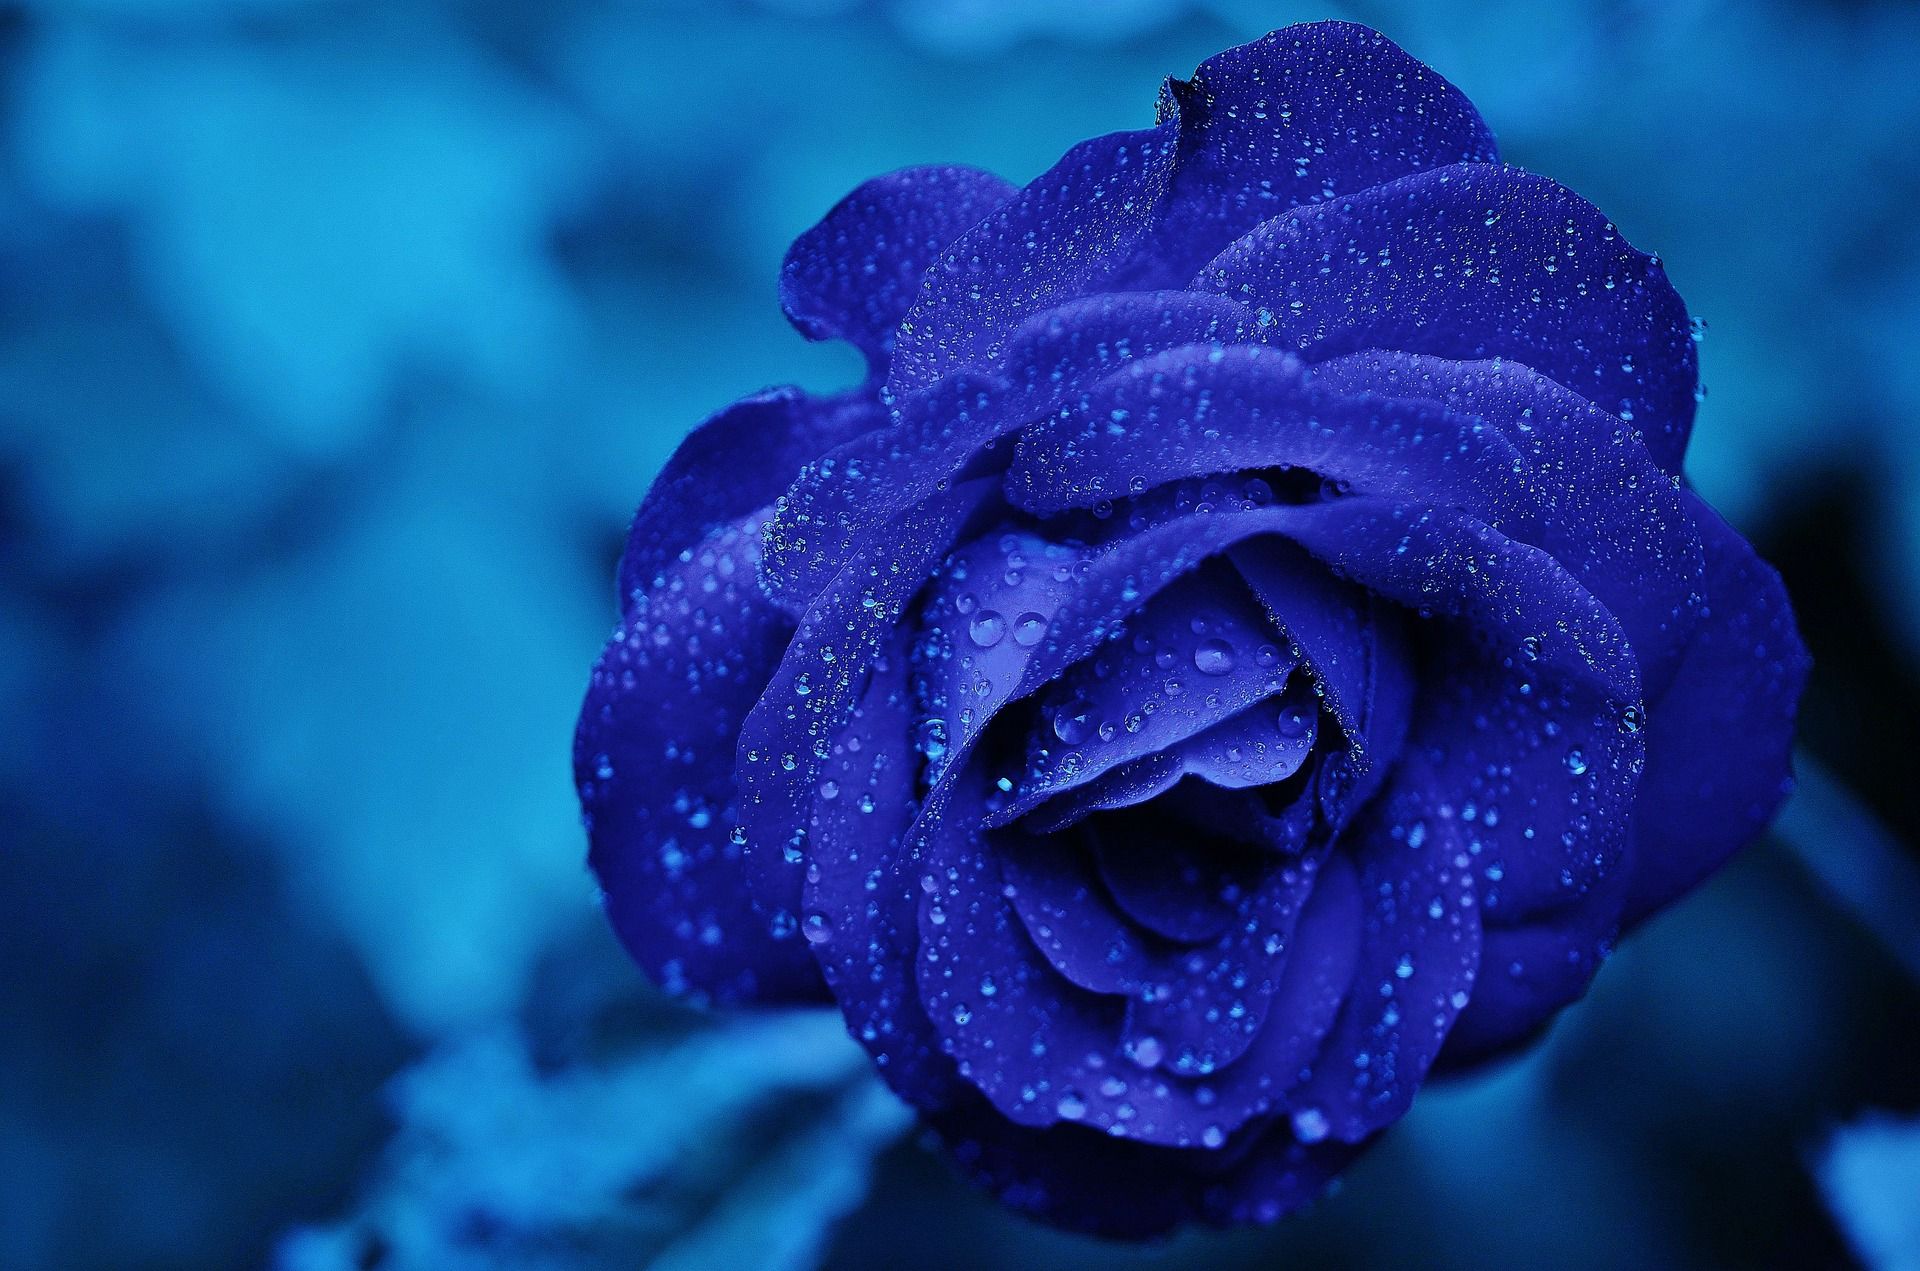 Blue Rose Desktop Wallpaper, Wide High Quality Blue Rose Desktop Wallpaper